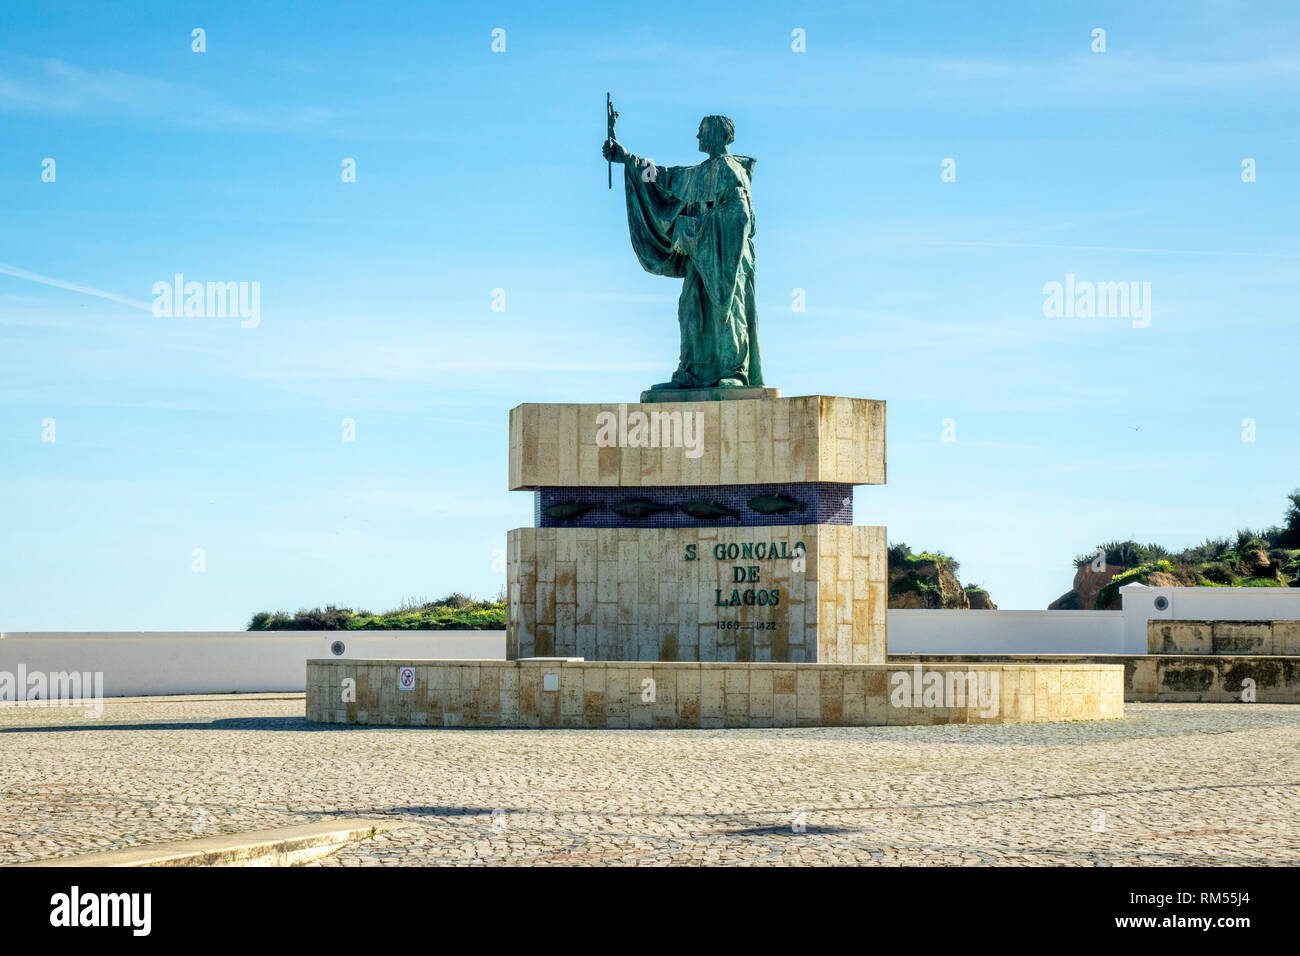 Statue Of Saint Goncalo de Lagos Algarve Portugal Patron Saint Of Lagos Fishermen Stock Photo